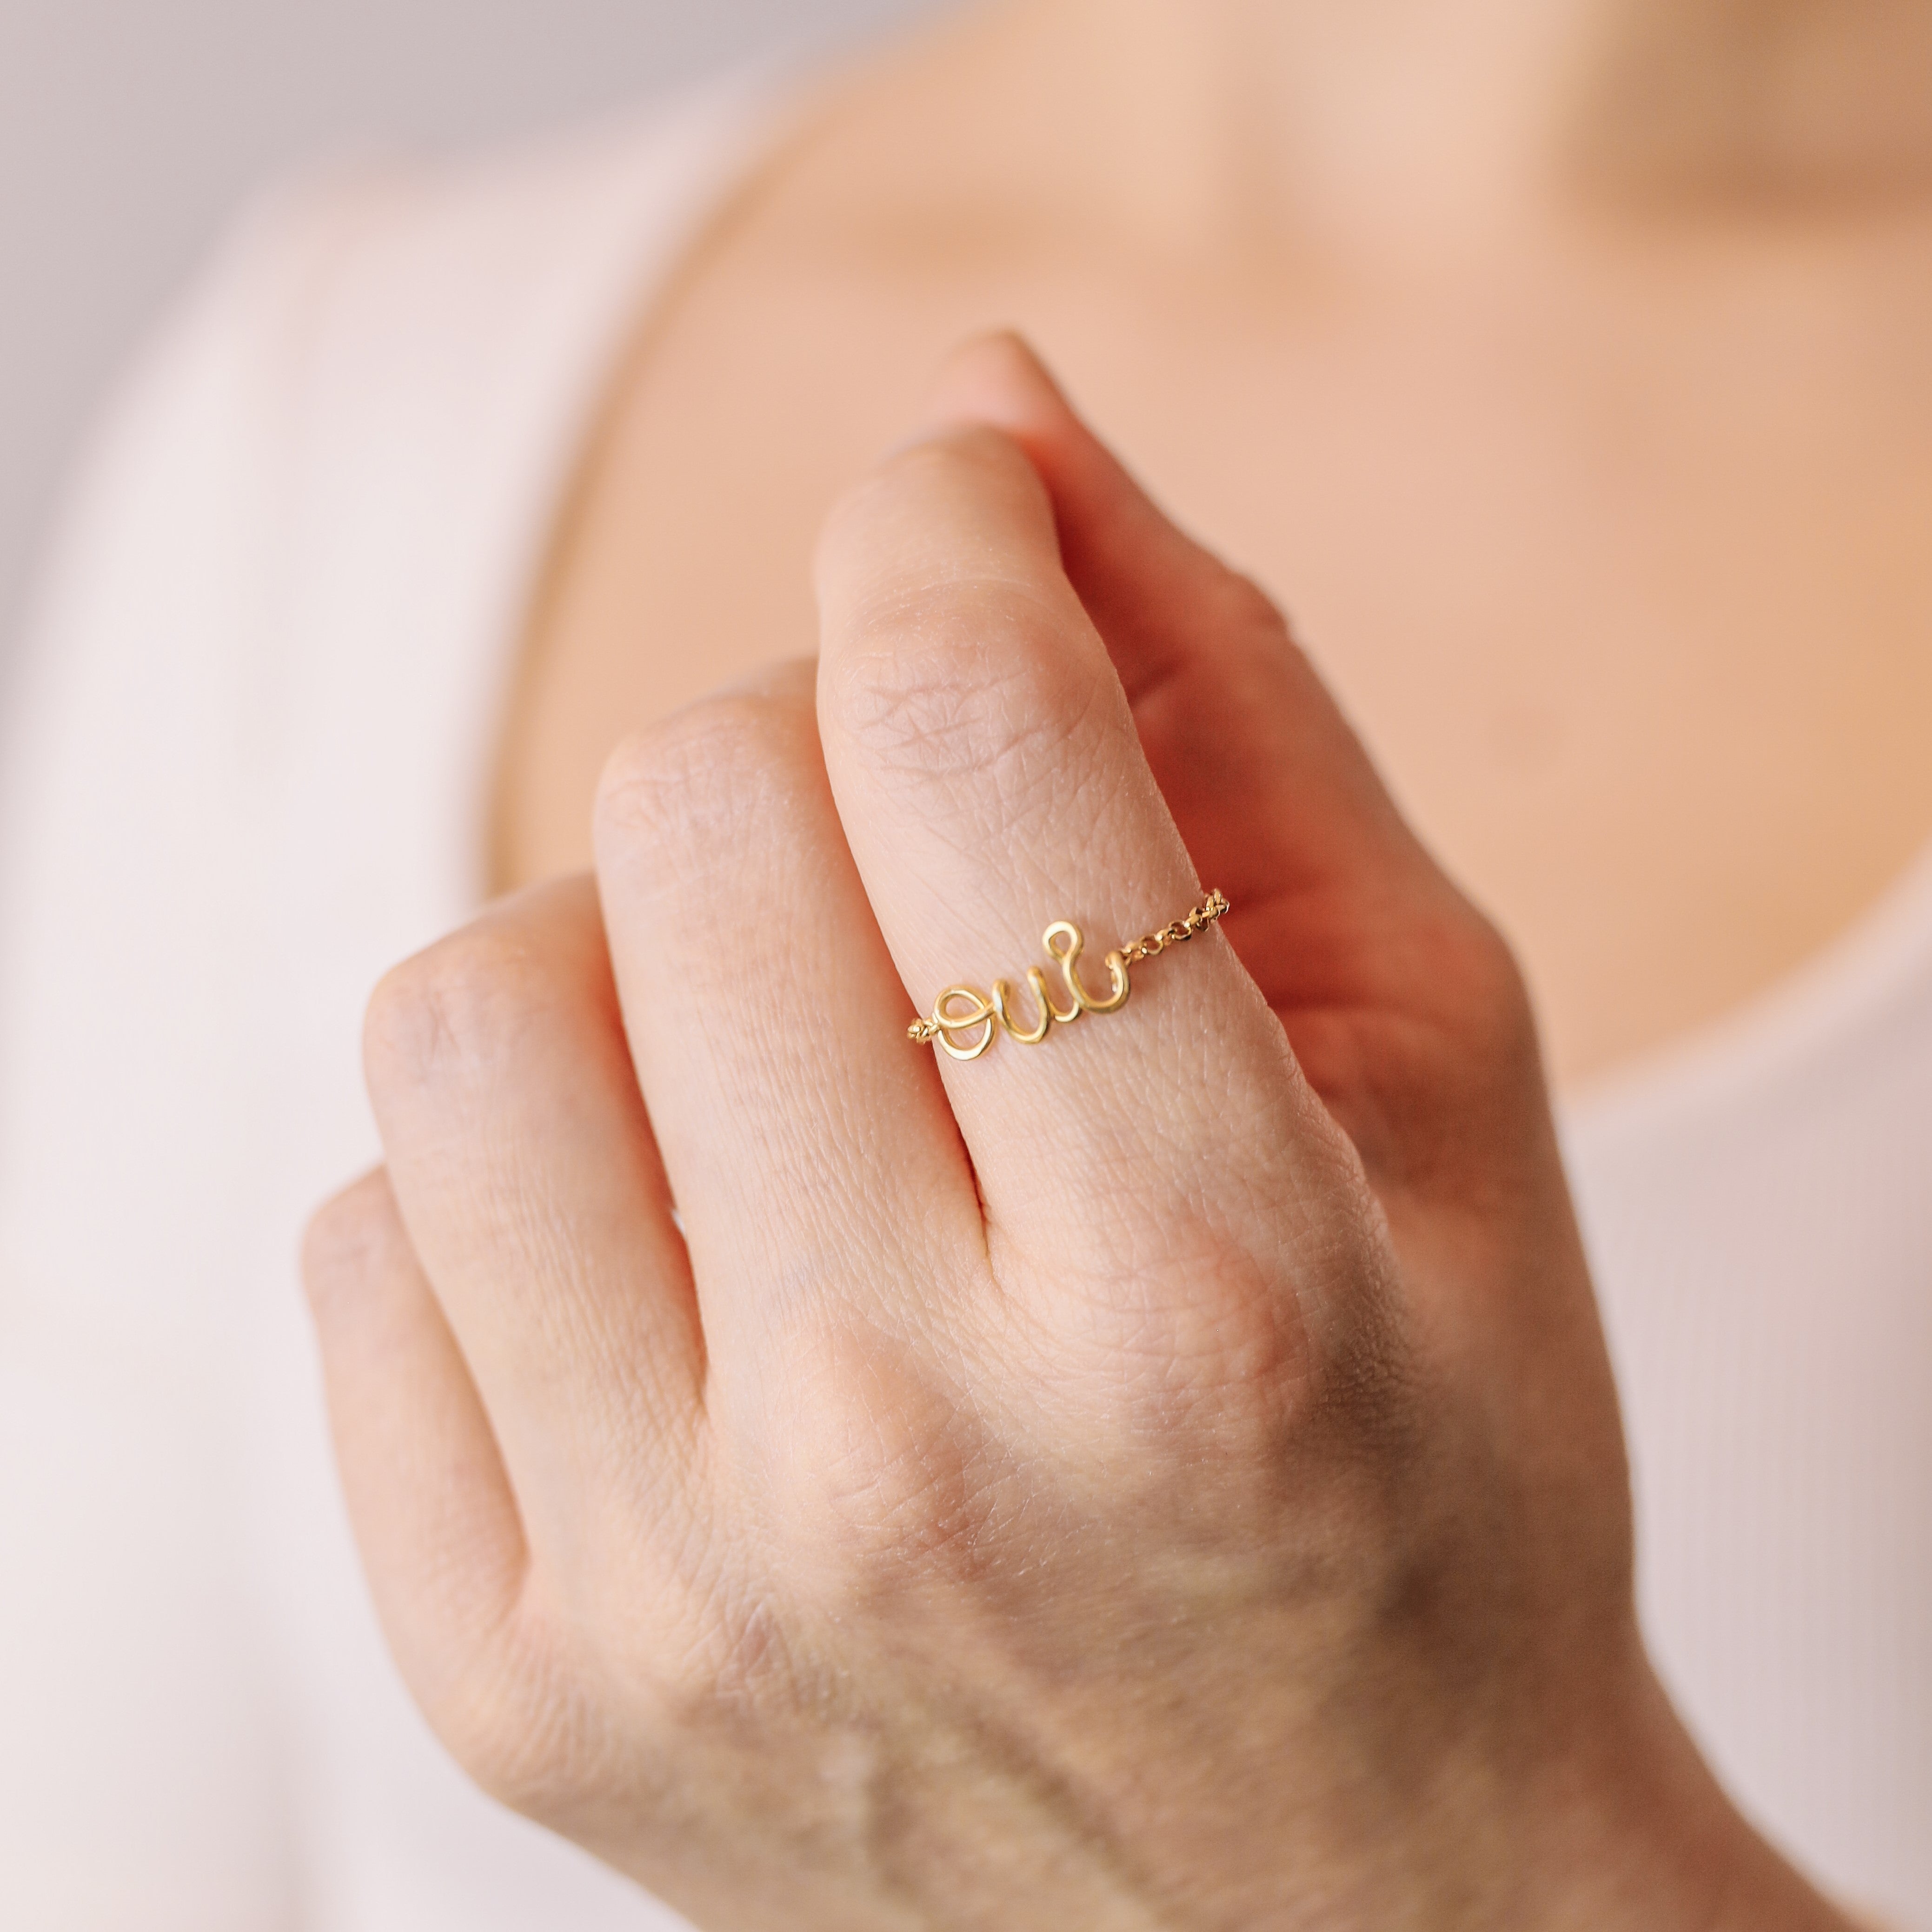 Buy Personalised Name Ring | Adjustable | Nayab Jewelry